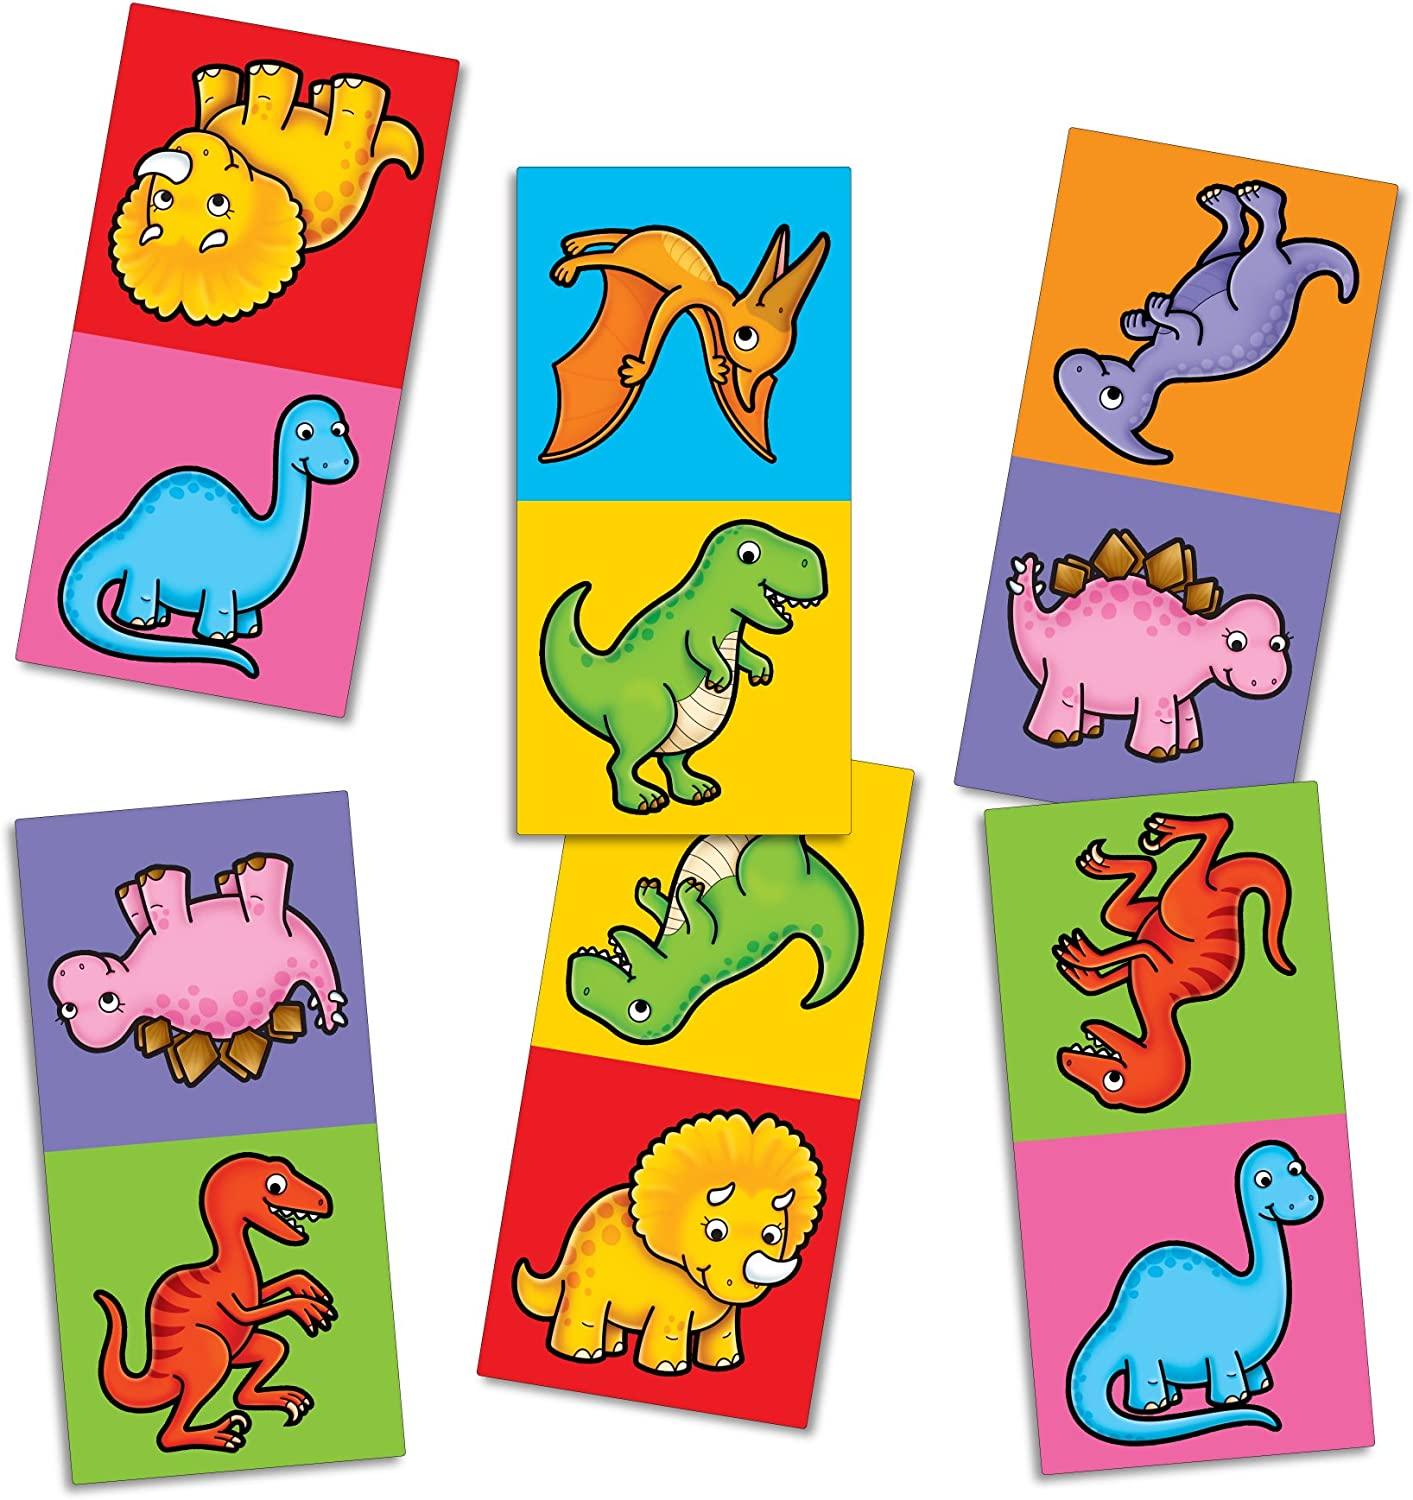 Dinosaur Dominoes Mini Game Kids Fun Matching Travel Activity - Home Inspired Gifts